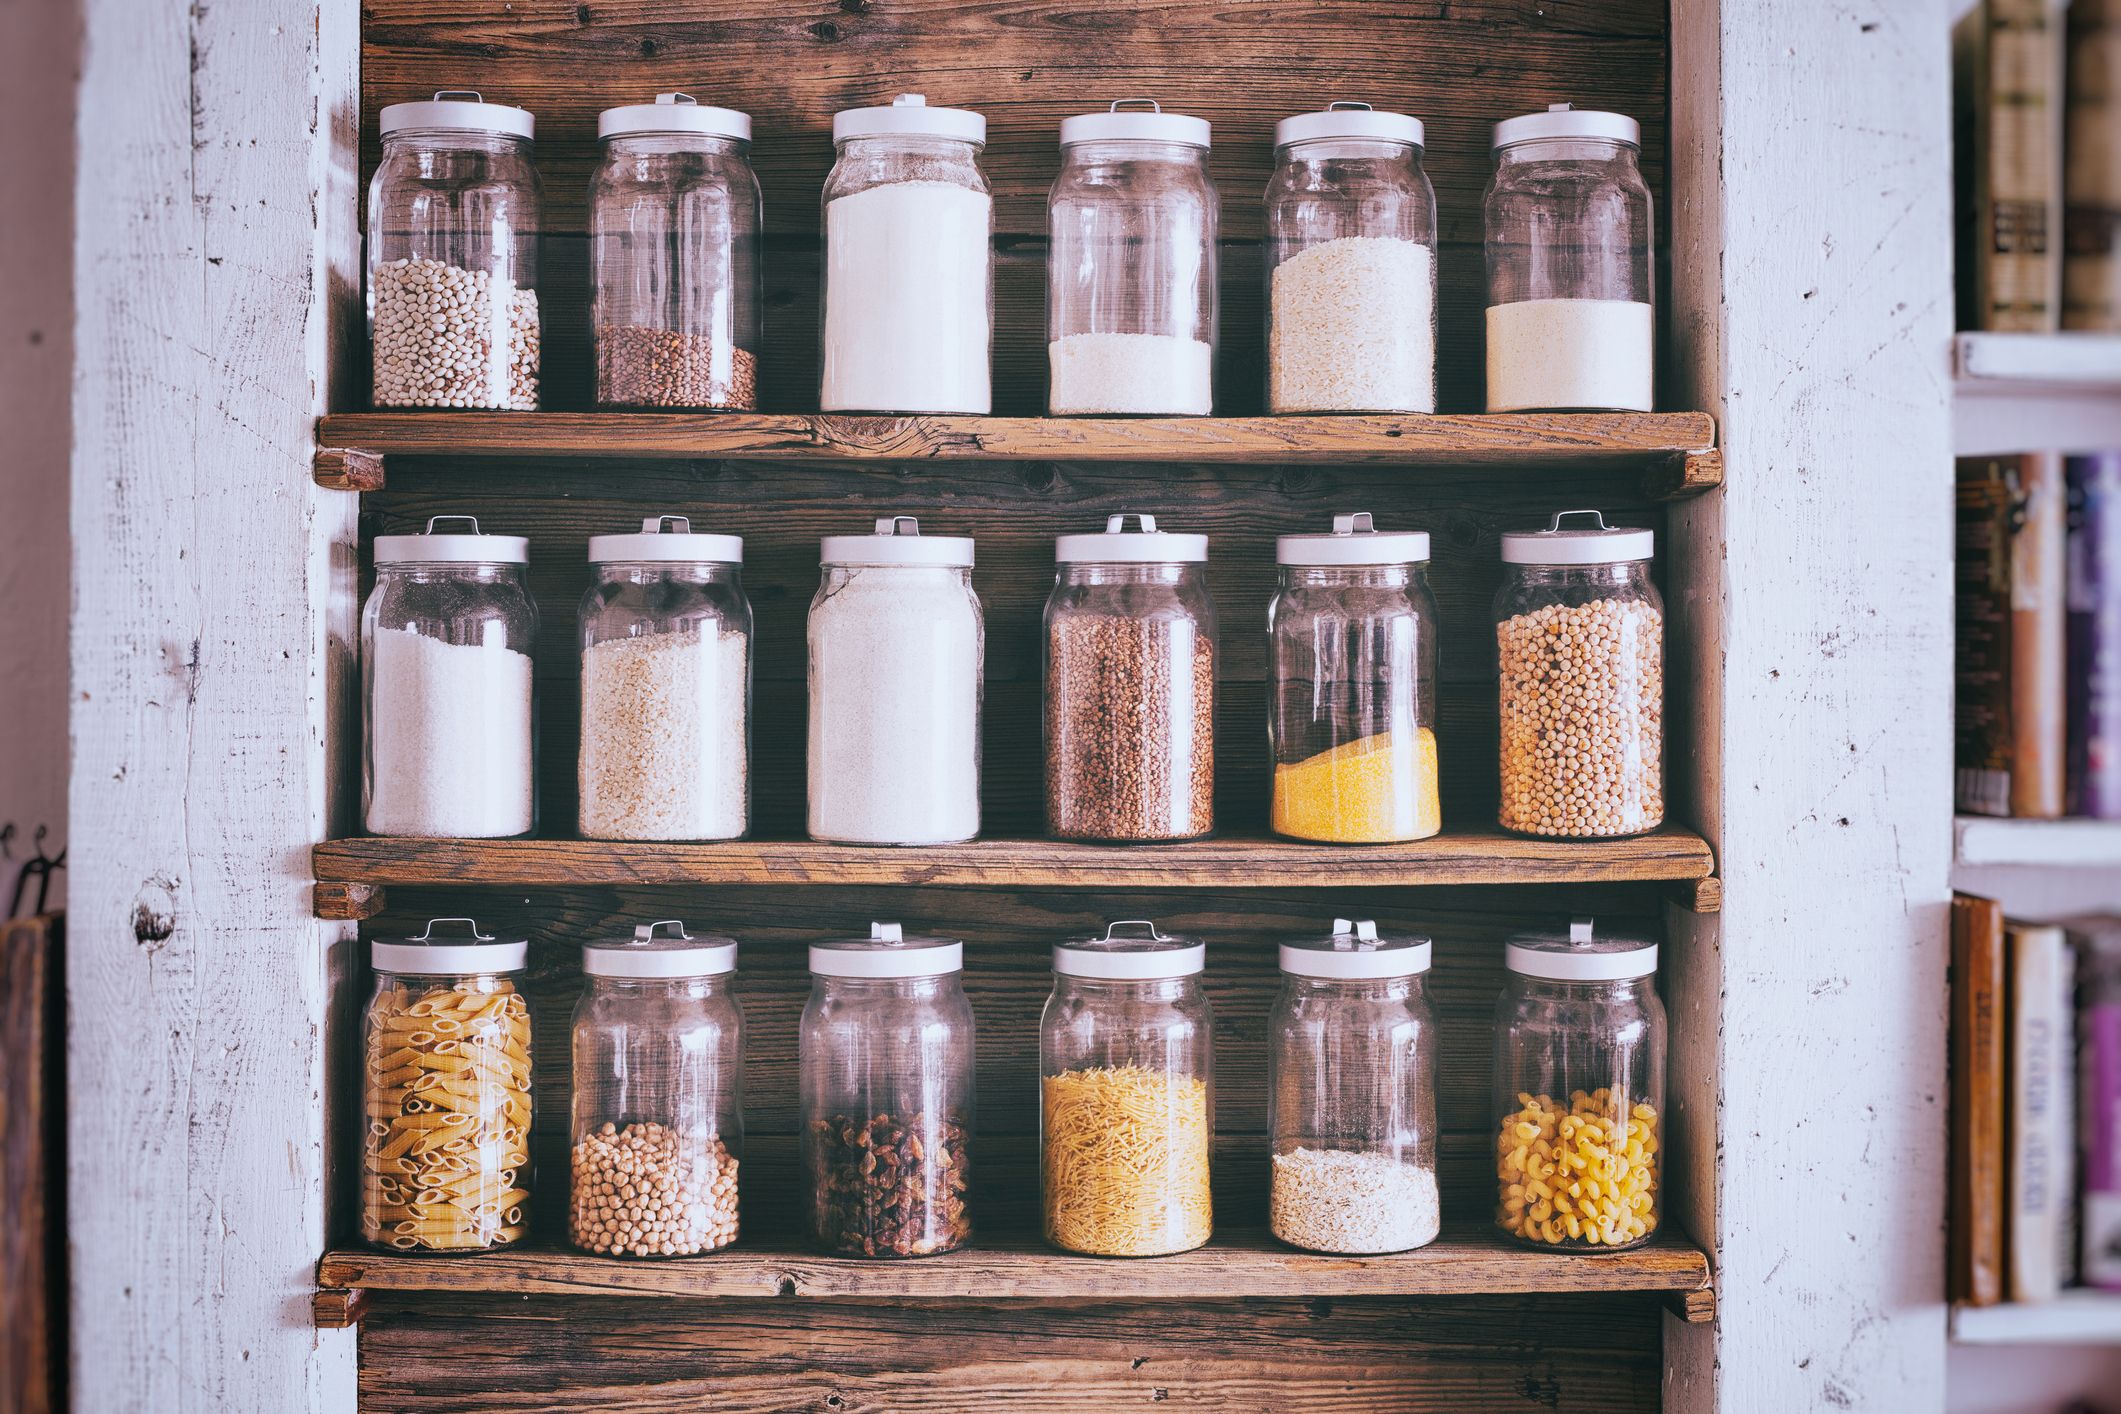 20 Genius Kitchen Pantry Organization Ideas How To Organize Your Pantry Delish Com